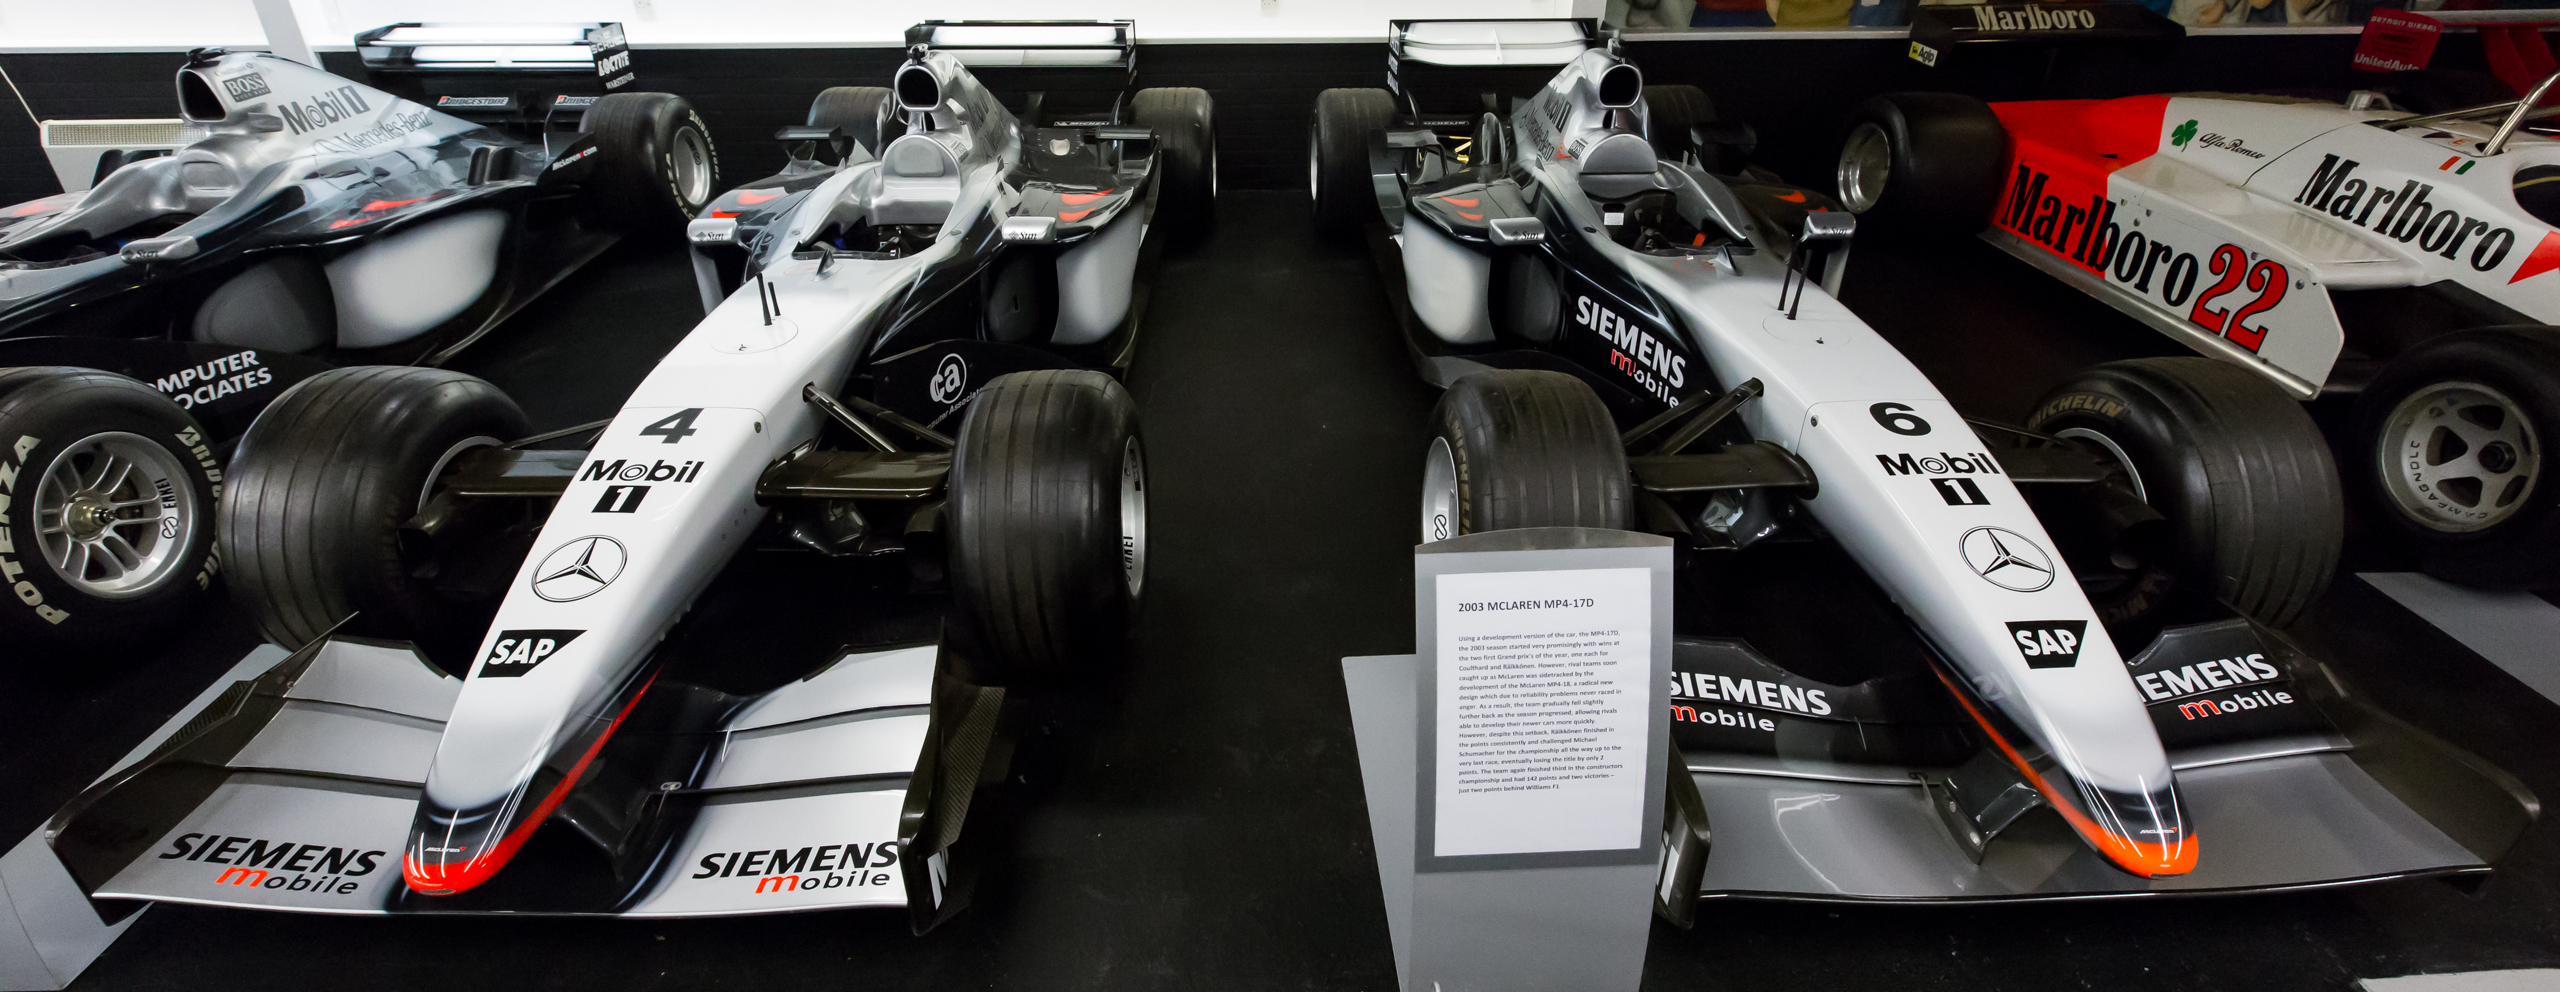 File:McLaren MP4-17 and MP4-17D Donington Grand Prix Collection 